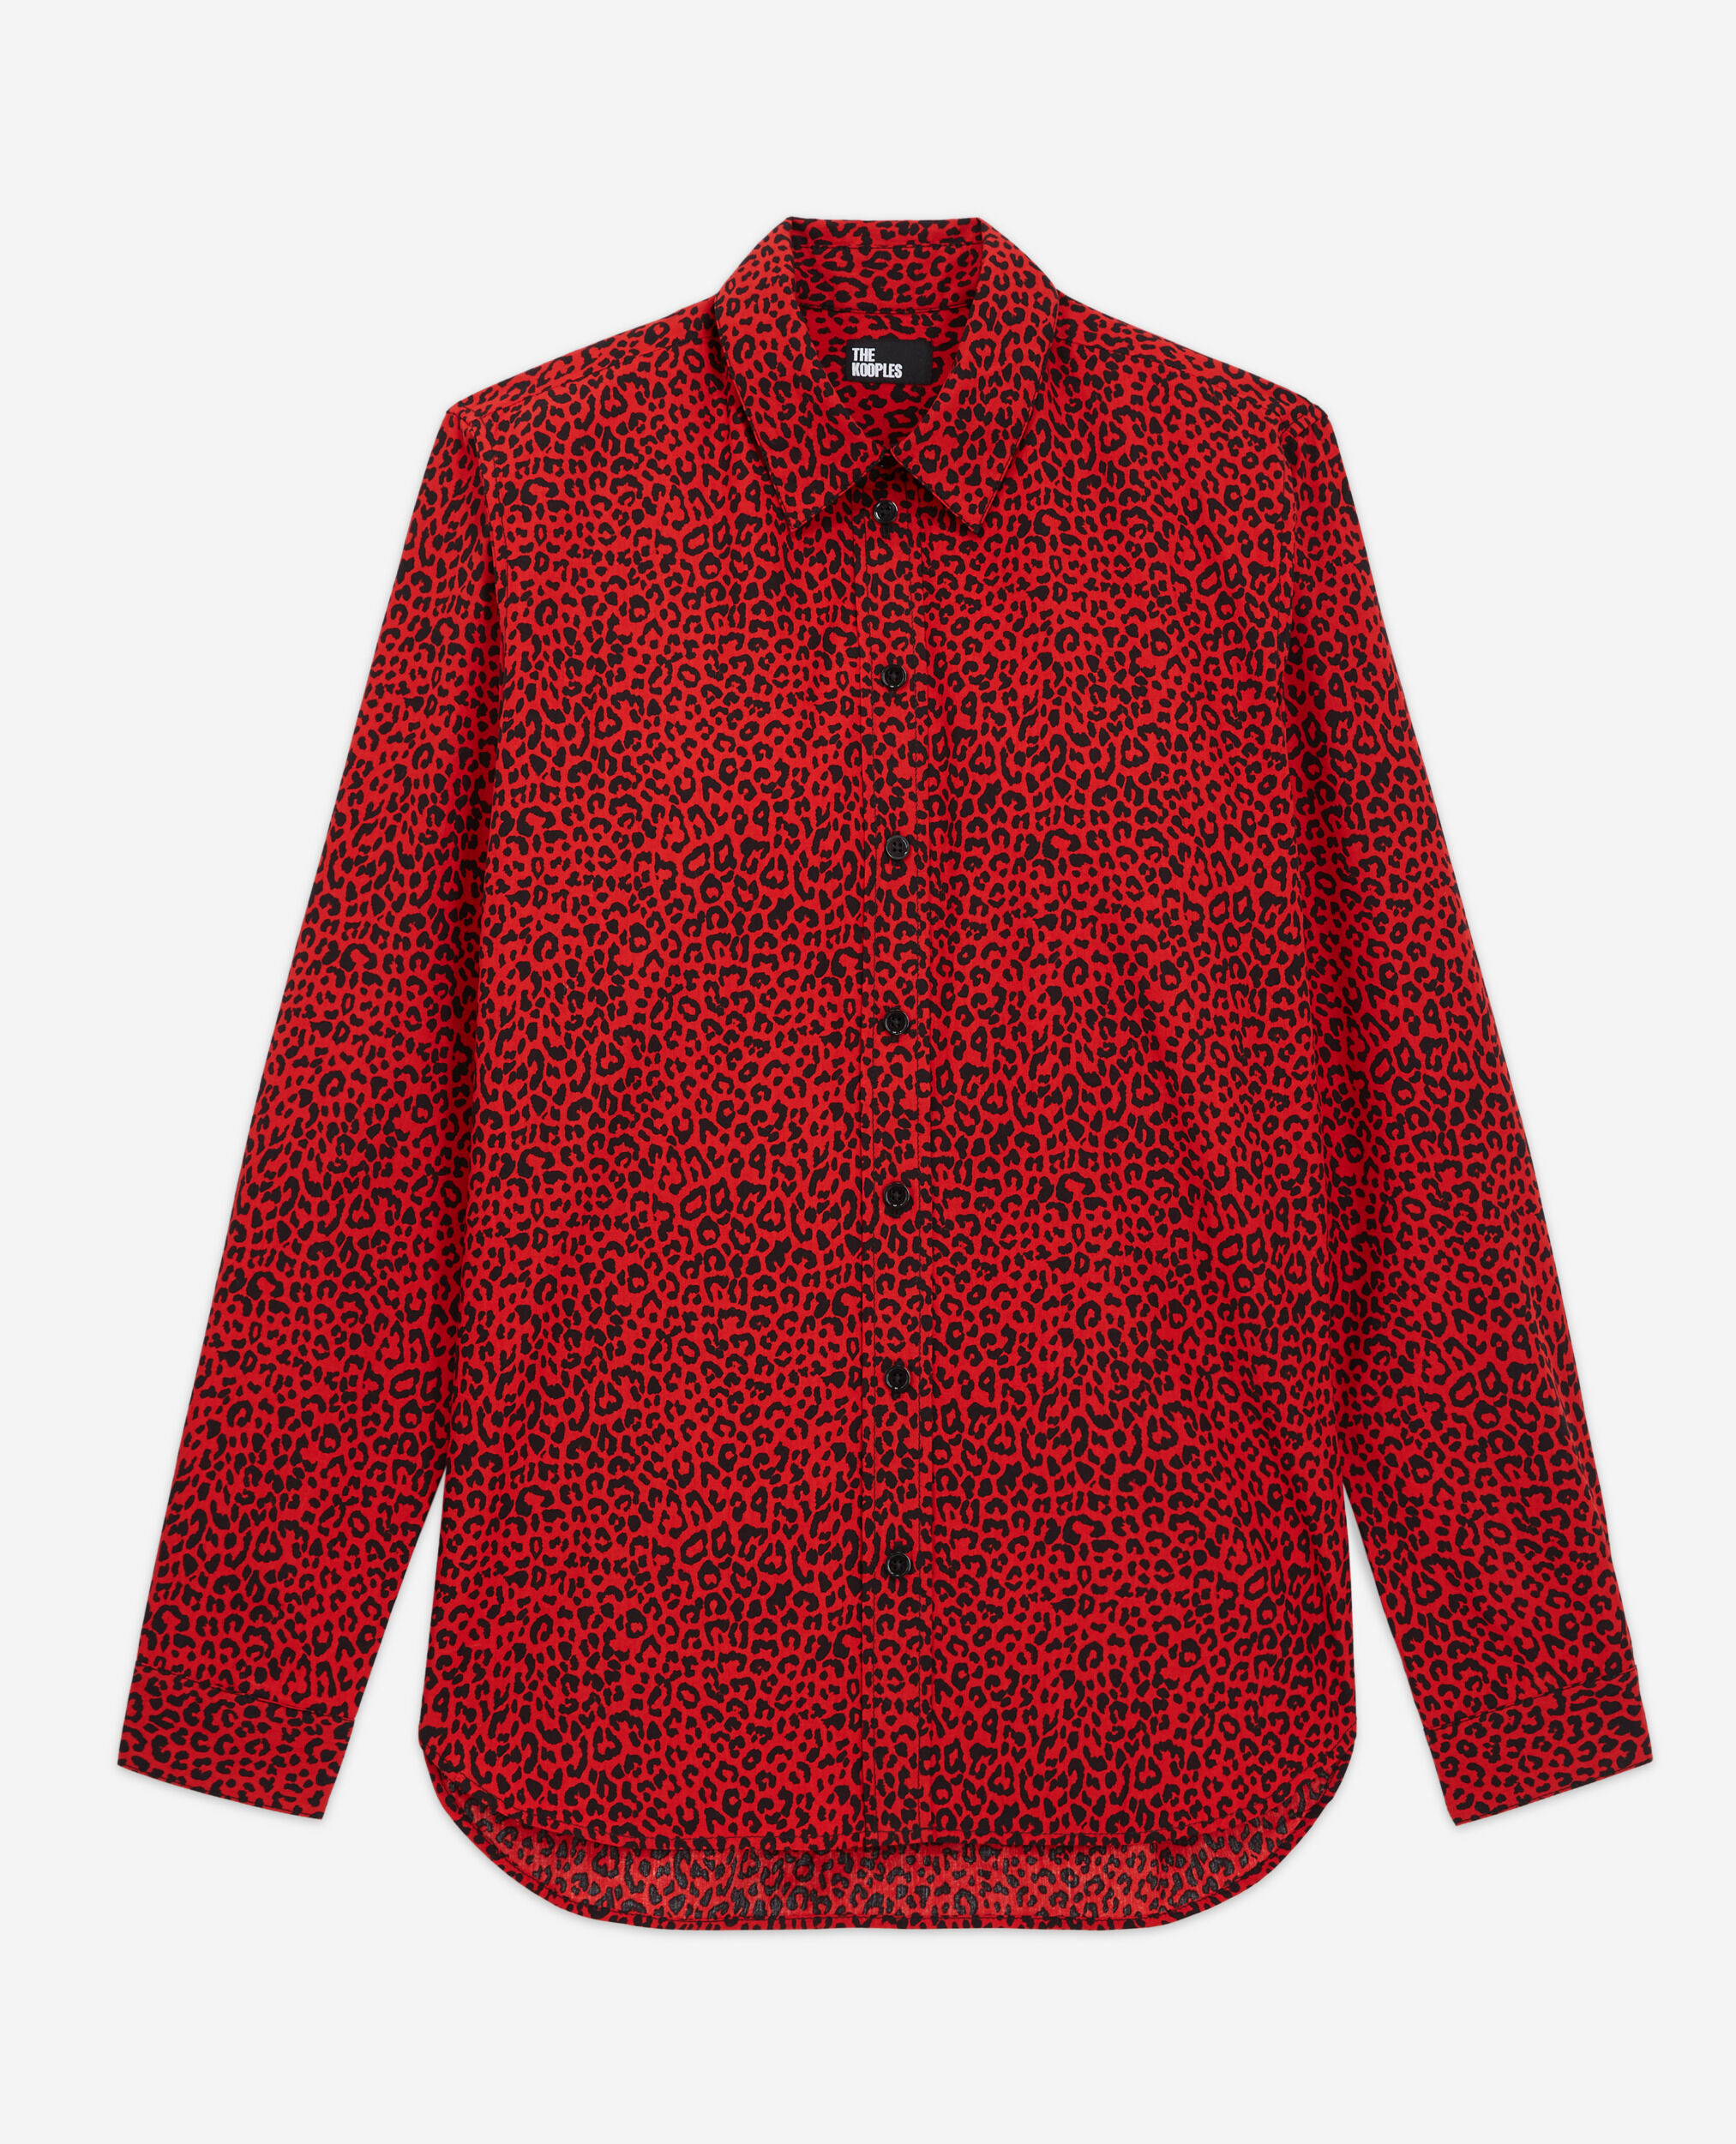 Camisa leopardo roja, RED / BLACK, hi-res image number null